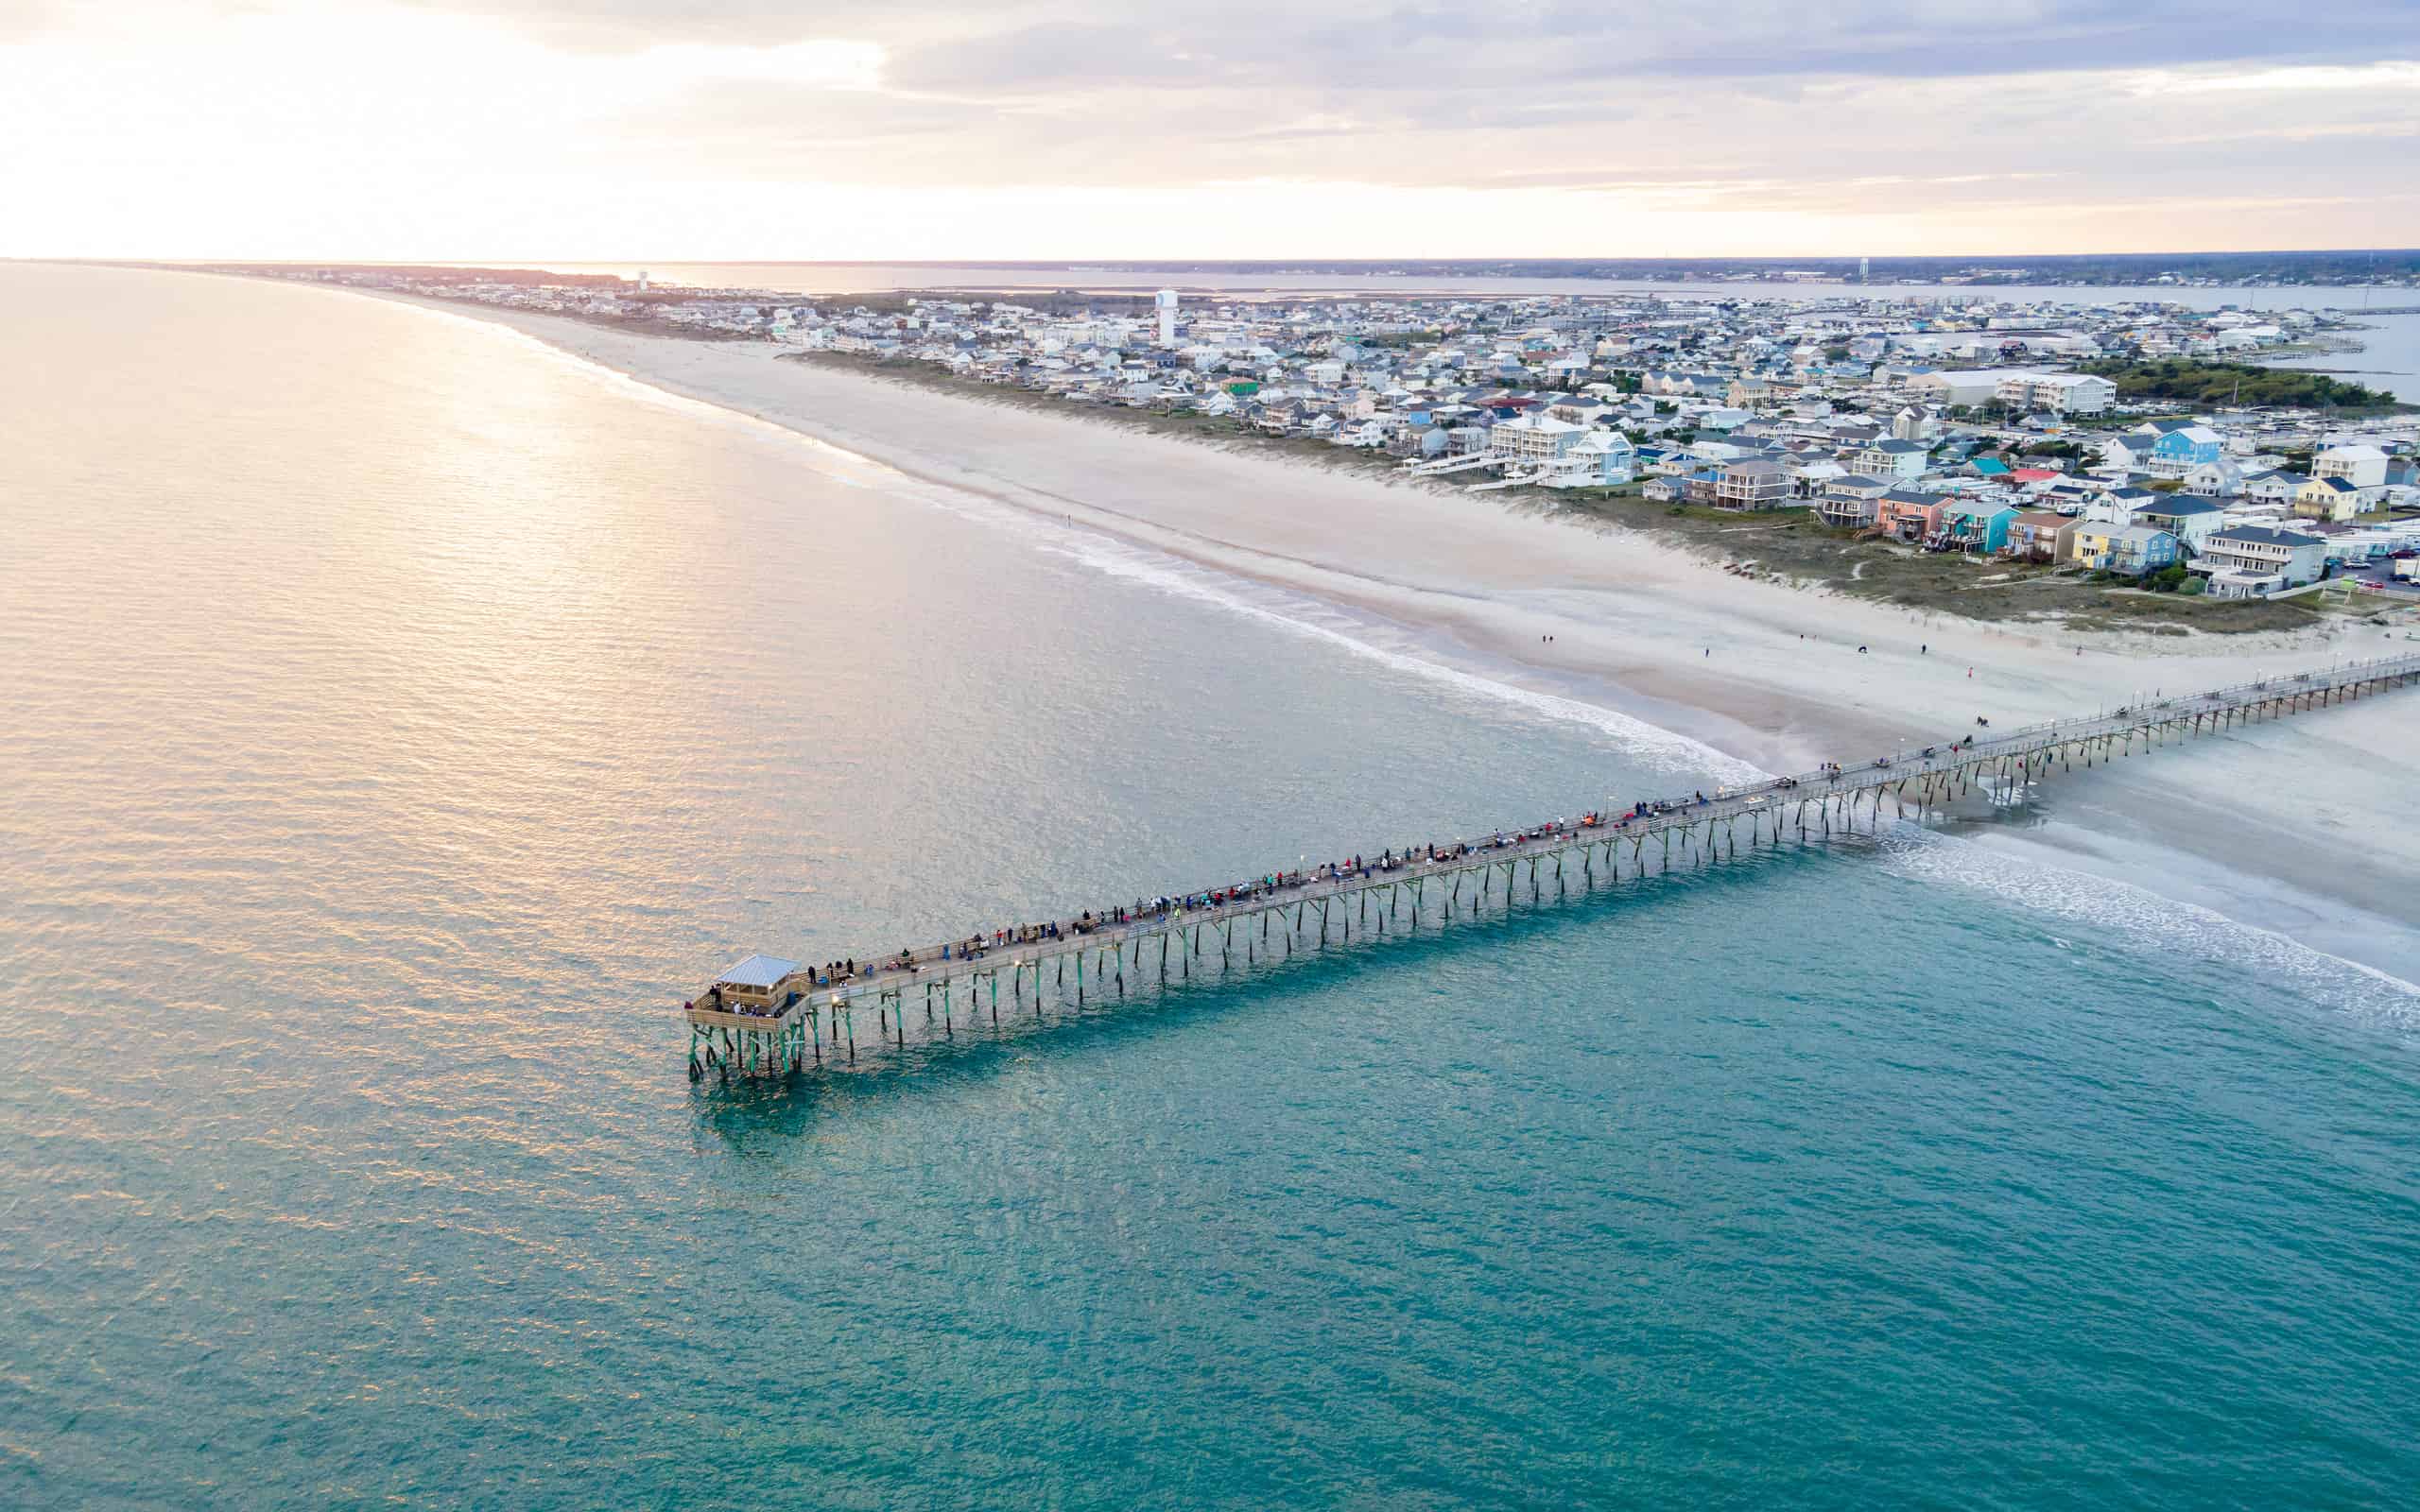 Drone View of Oceanana Pier in Atlantic Beach, North Carolina at Sunset